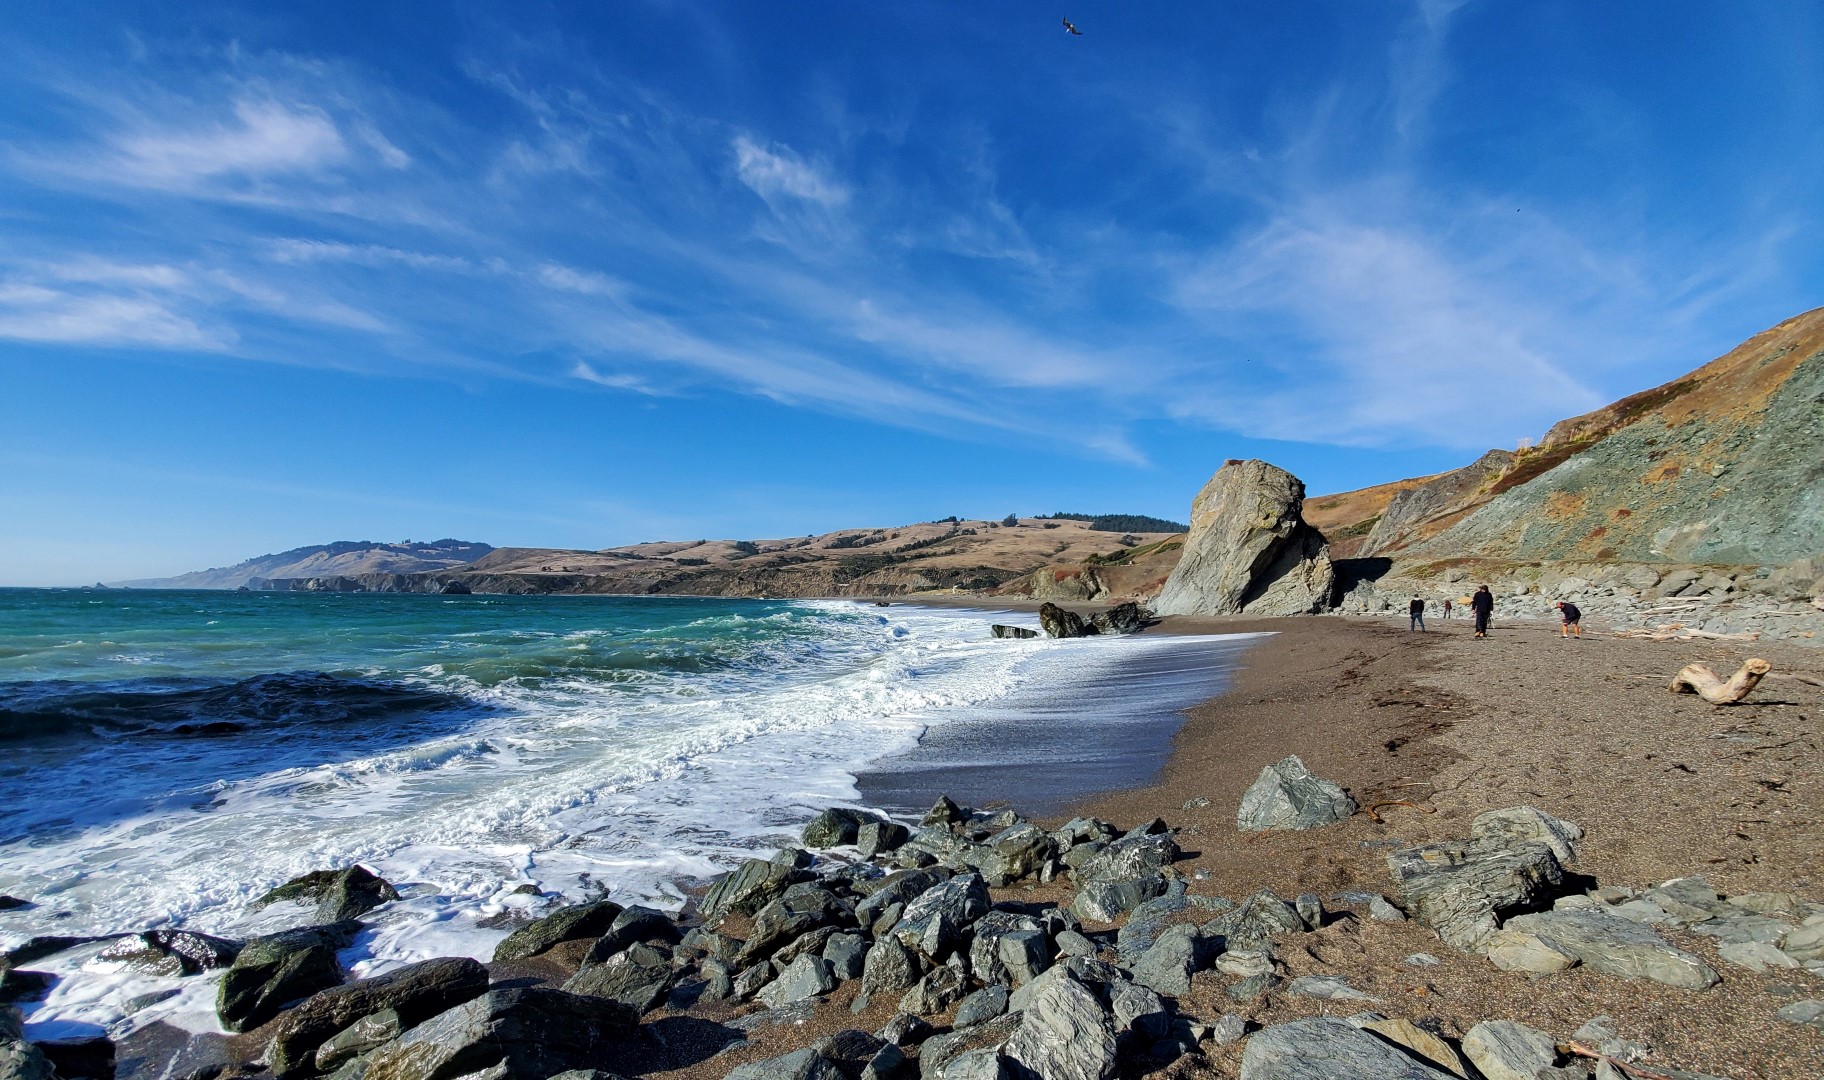 Discover Sonoma County's Marine Wildlife at Goat Rock Beach